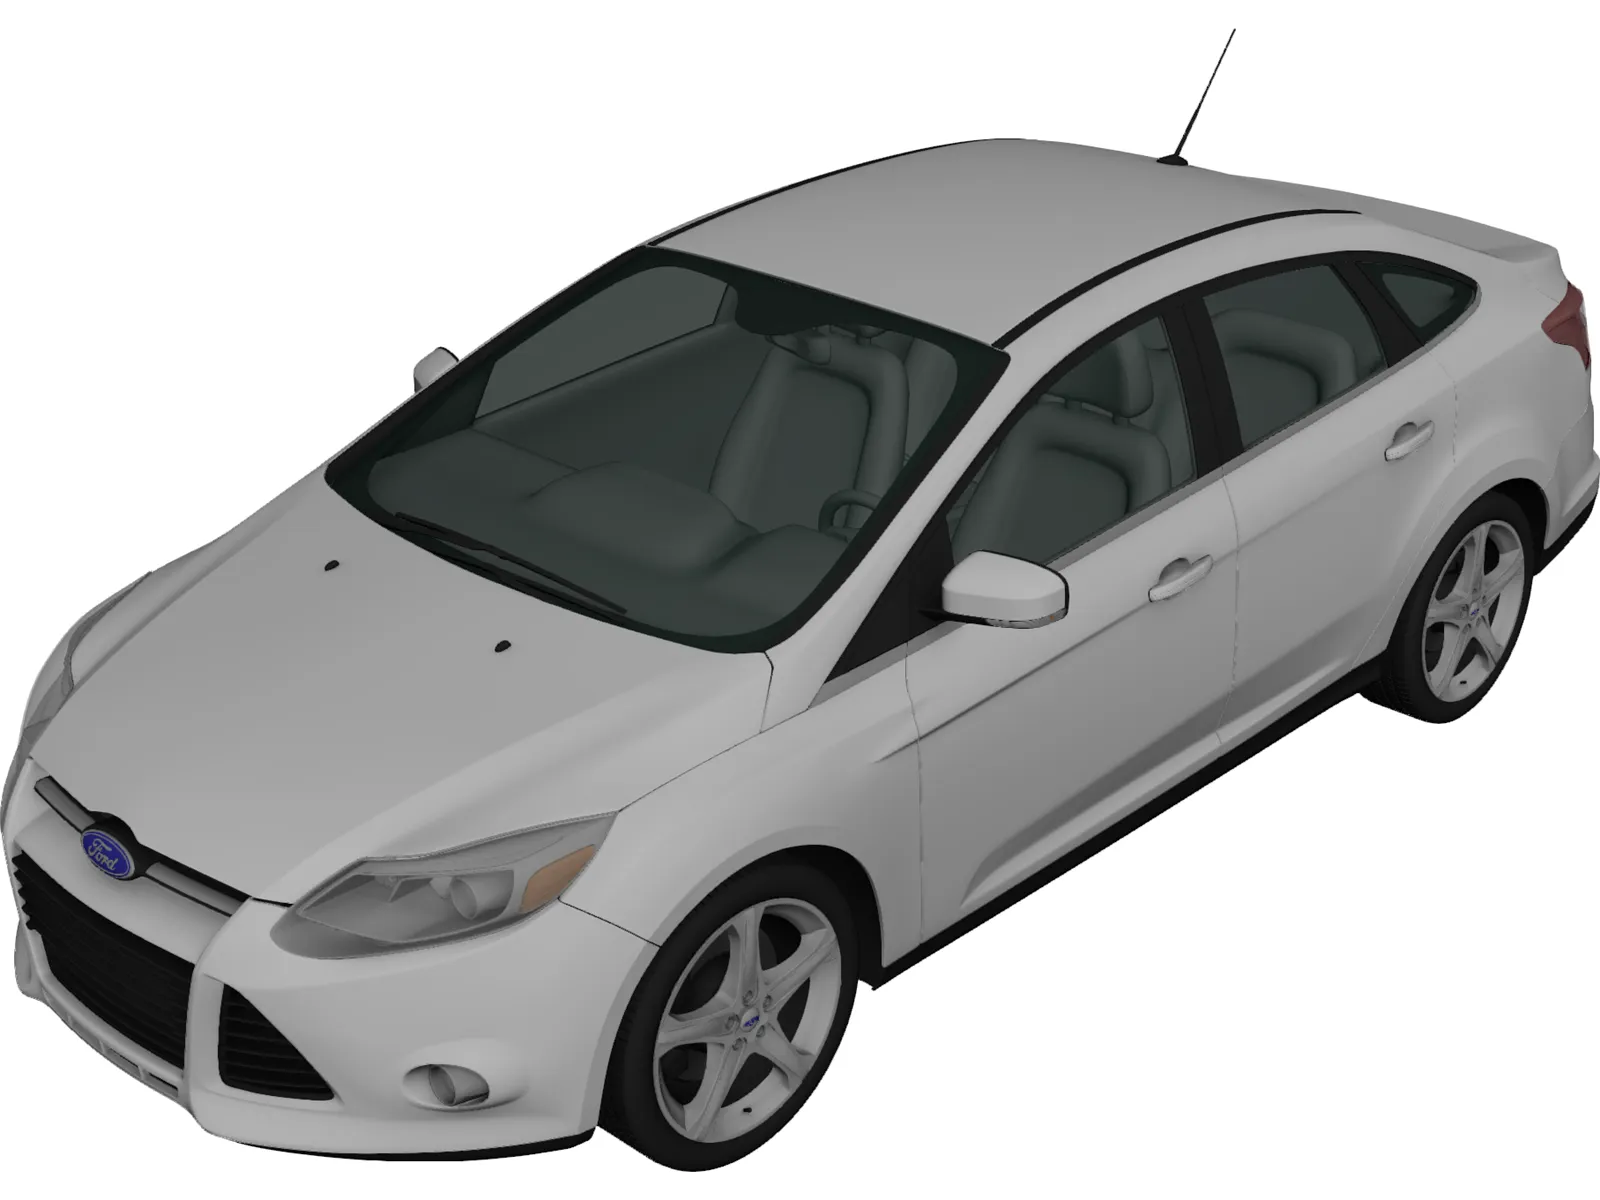 Ford Focus Sedan (2011) 3D Model